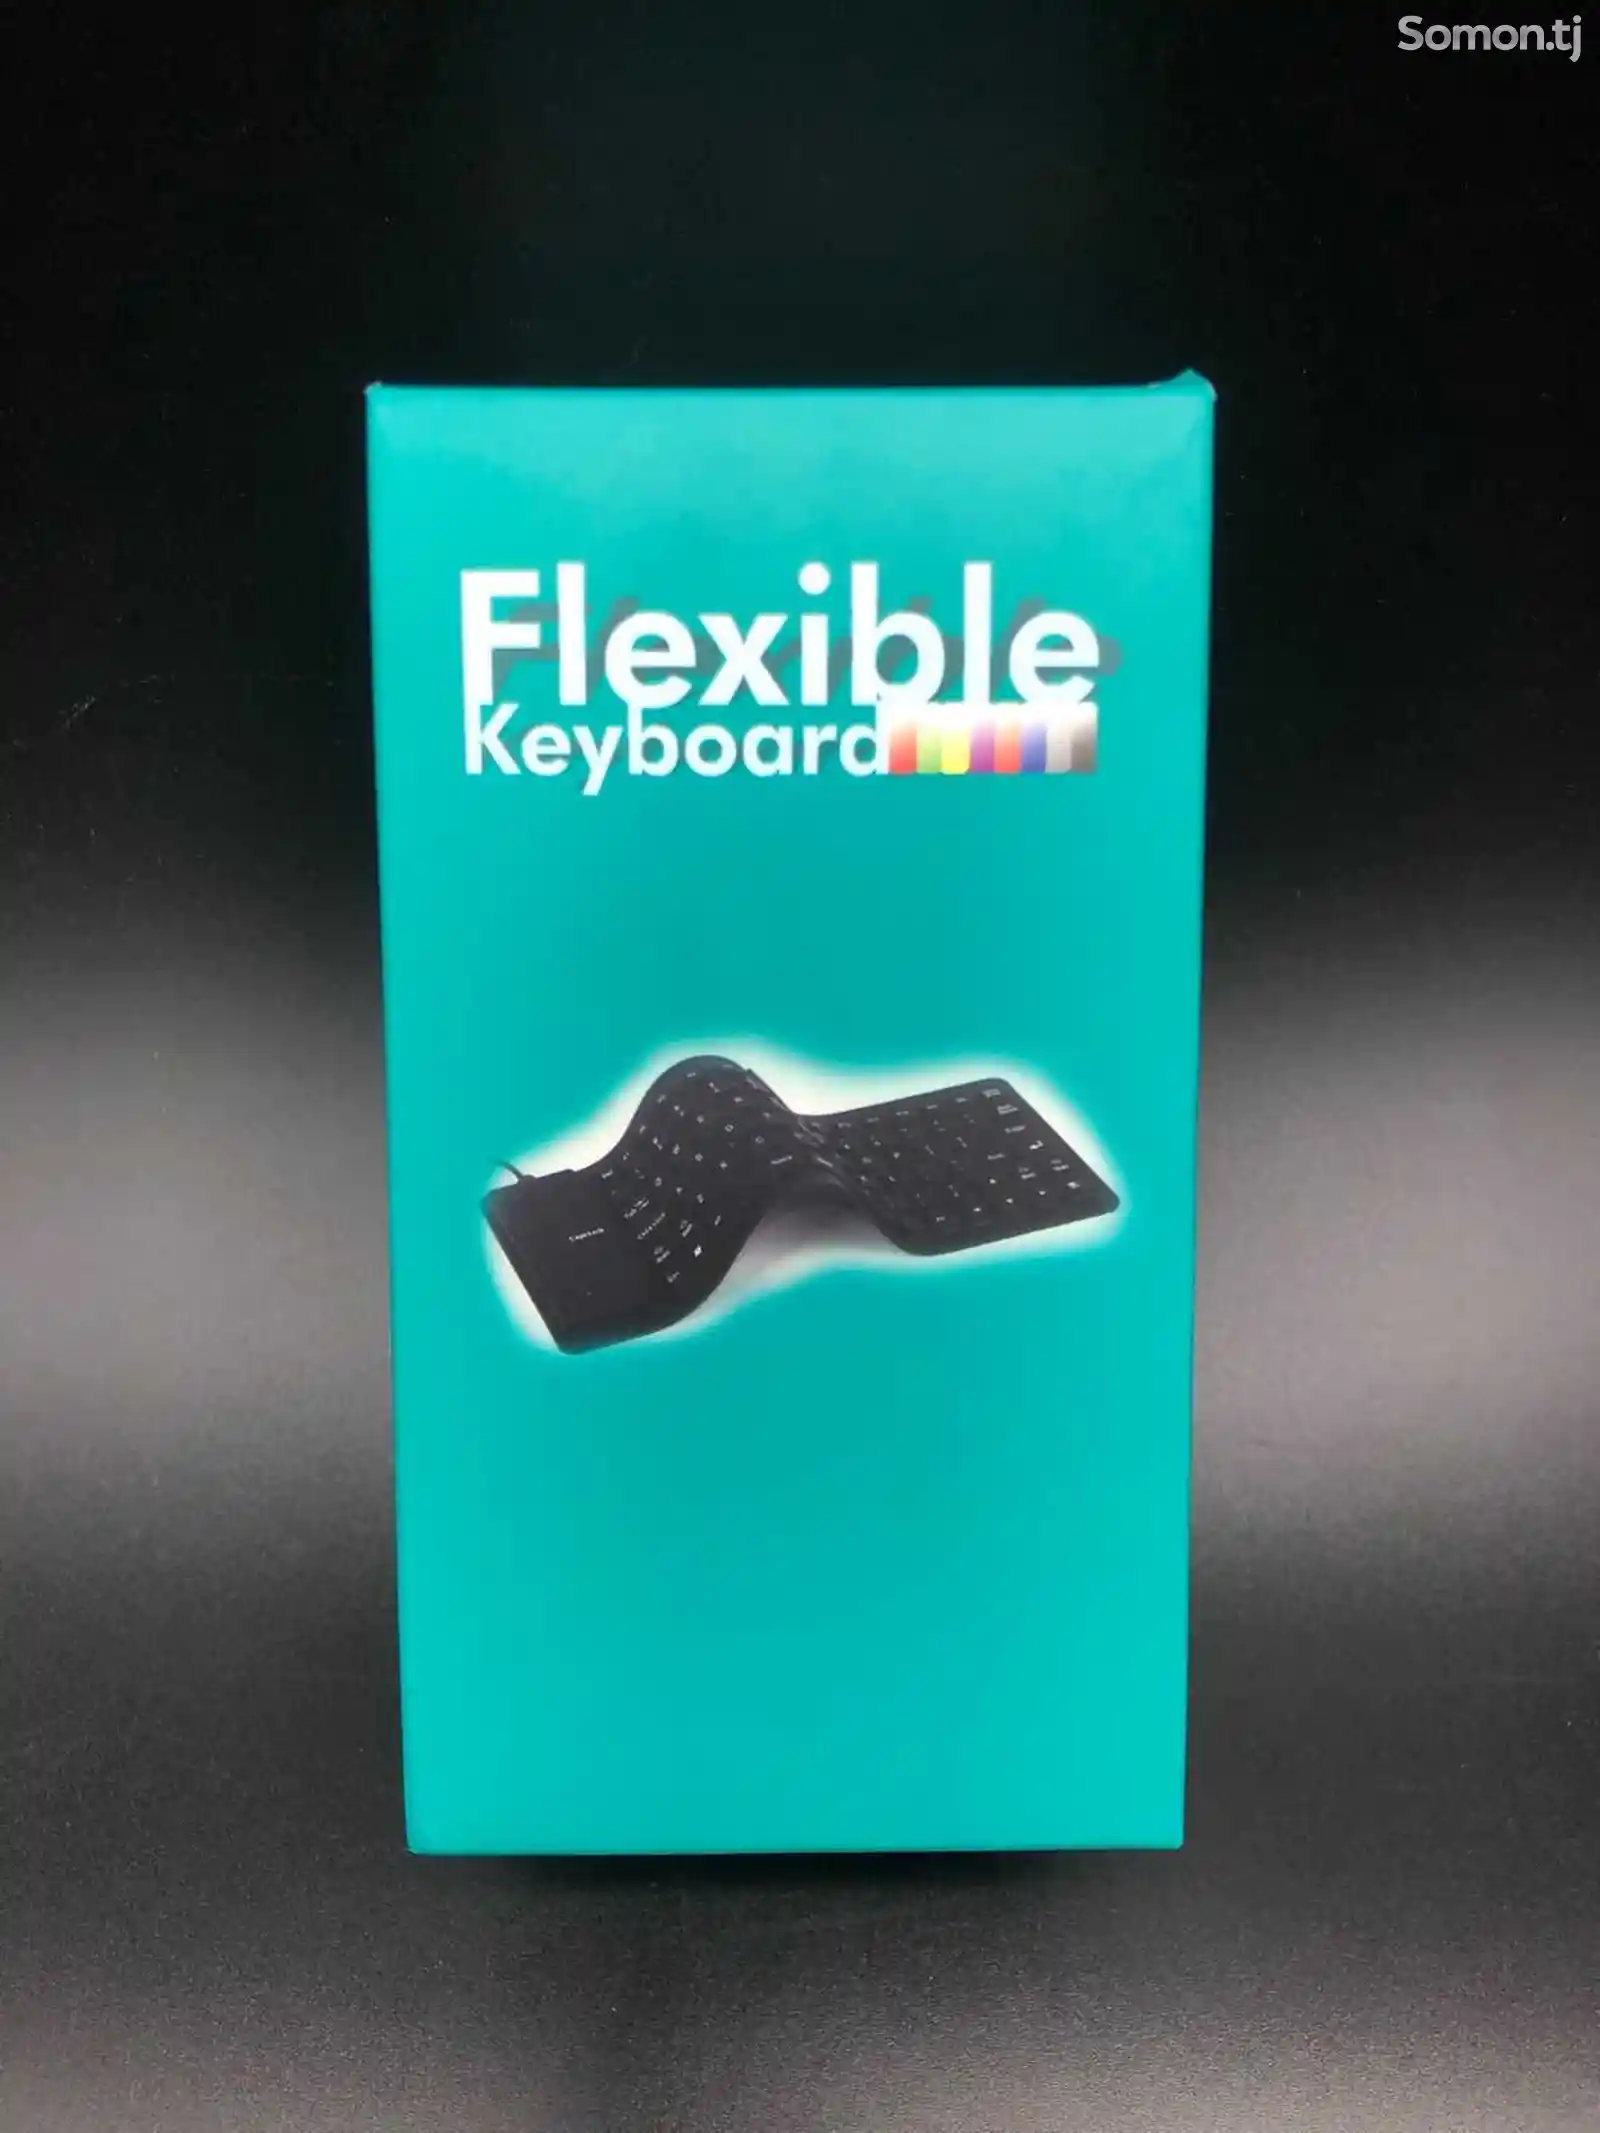 Flexible Keyboard-сгибающая клавиатура-6